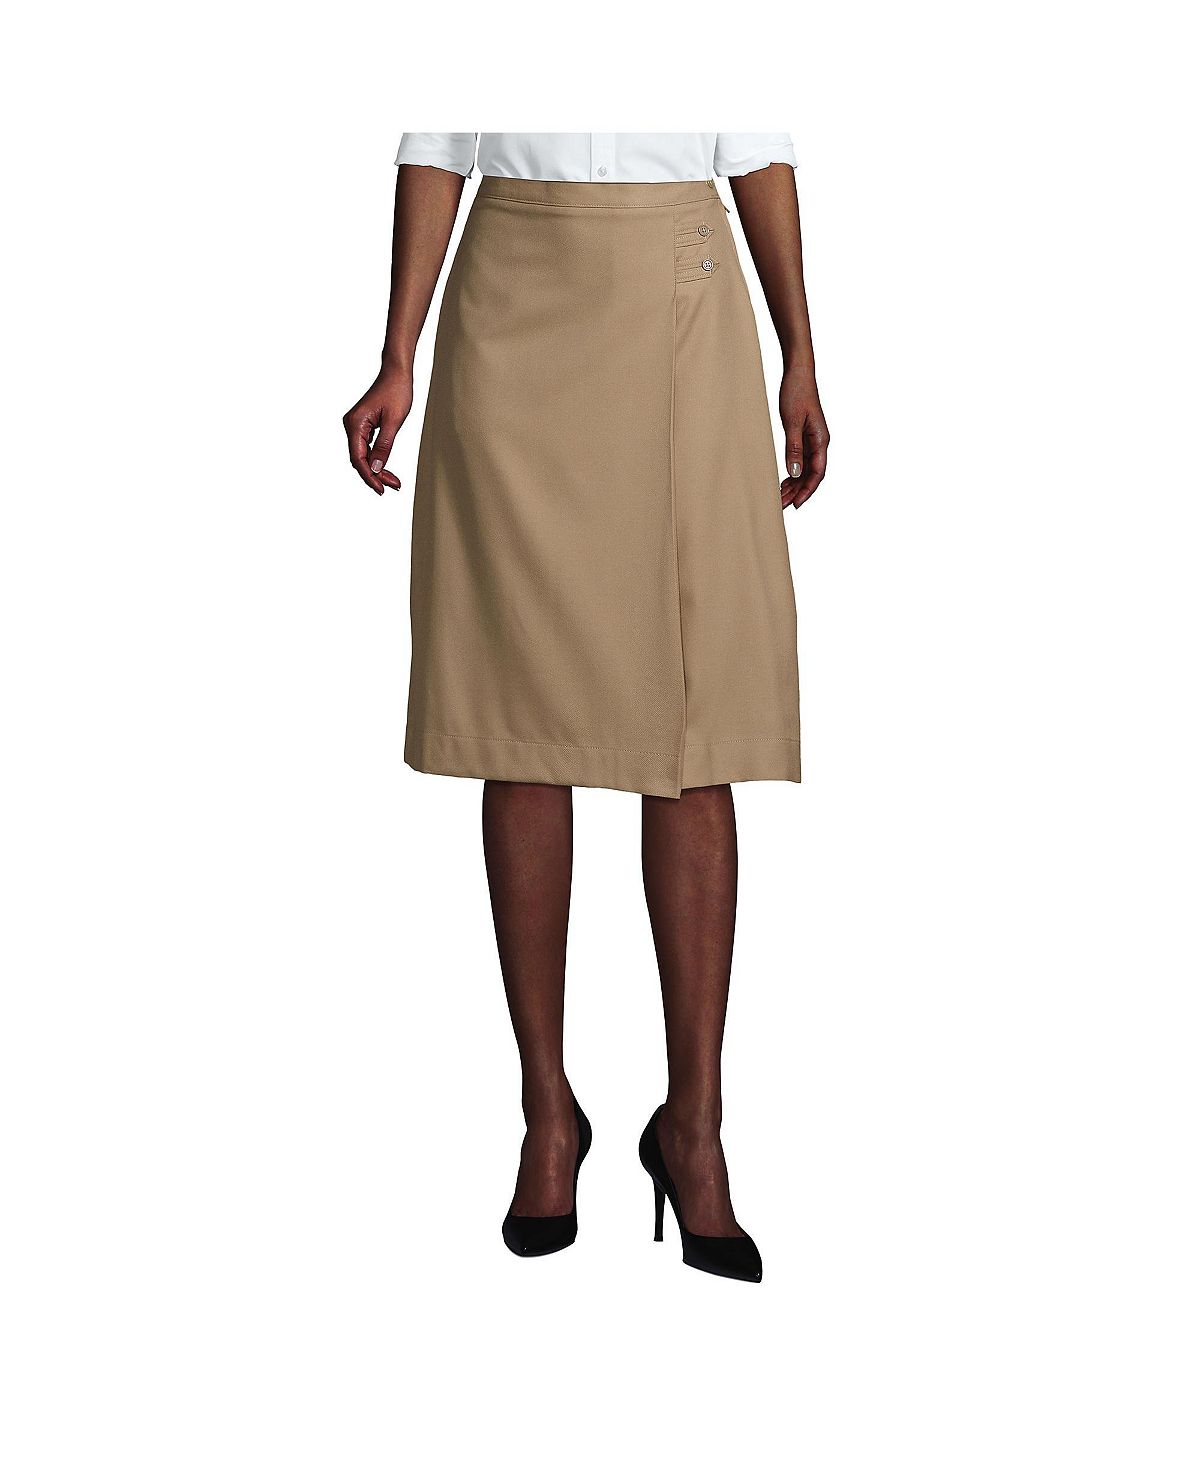 цена Школьная форма, женская однотонная юбка-трапеция ниже колена Lands' End, хаки